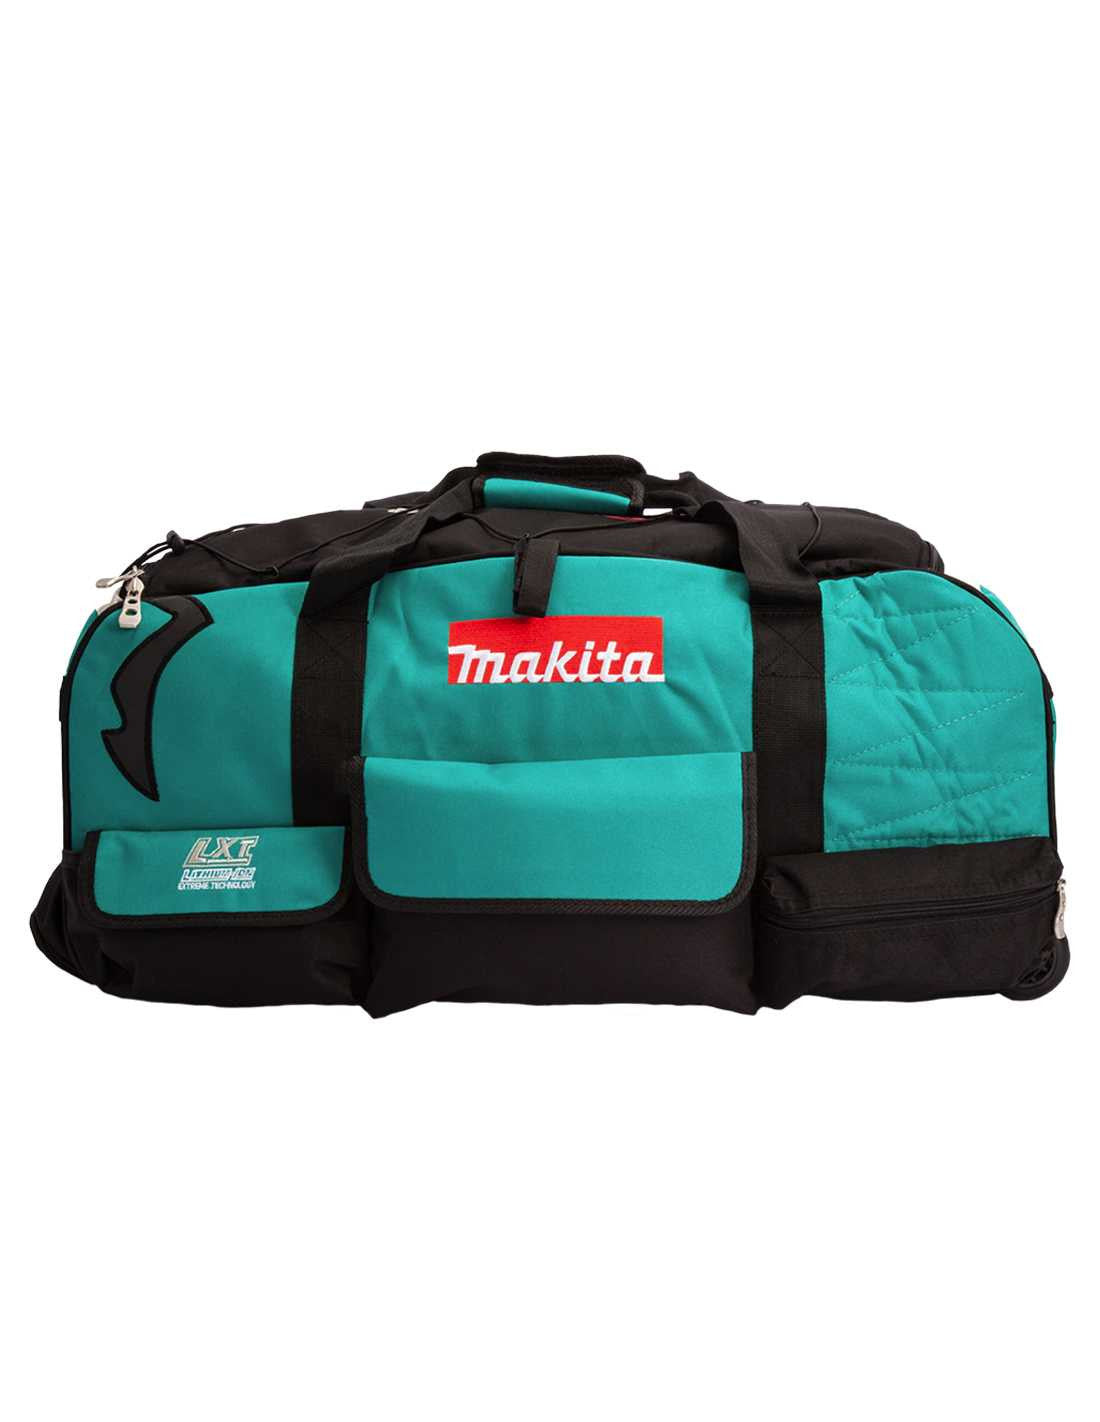 Kit Makita con 9 herramientas + 3 bat 5.0Ah + cargador + 2 bolsas DLX9243BL3